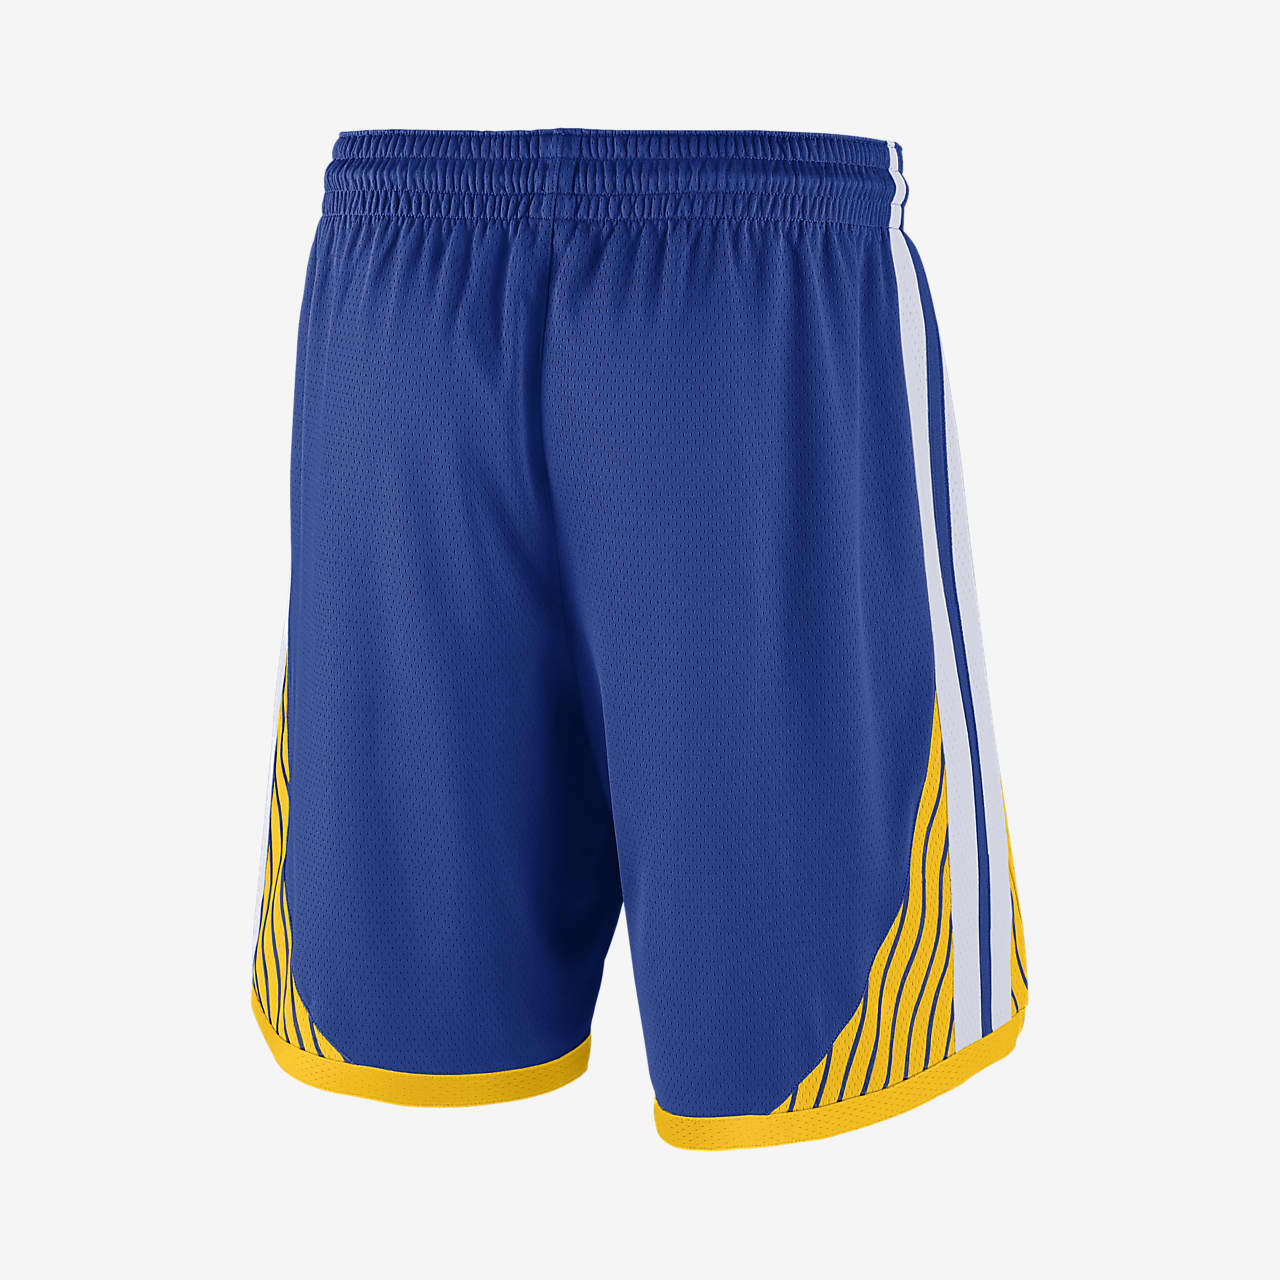 Nike NBA Swingman Shorts. Nike EG